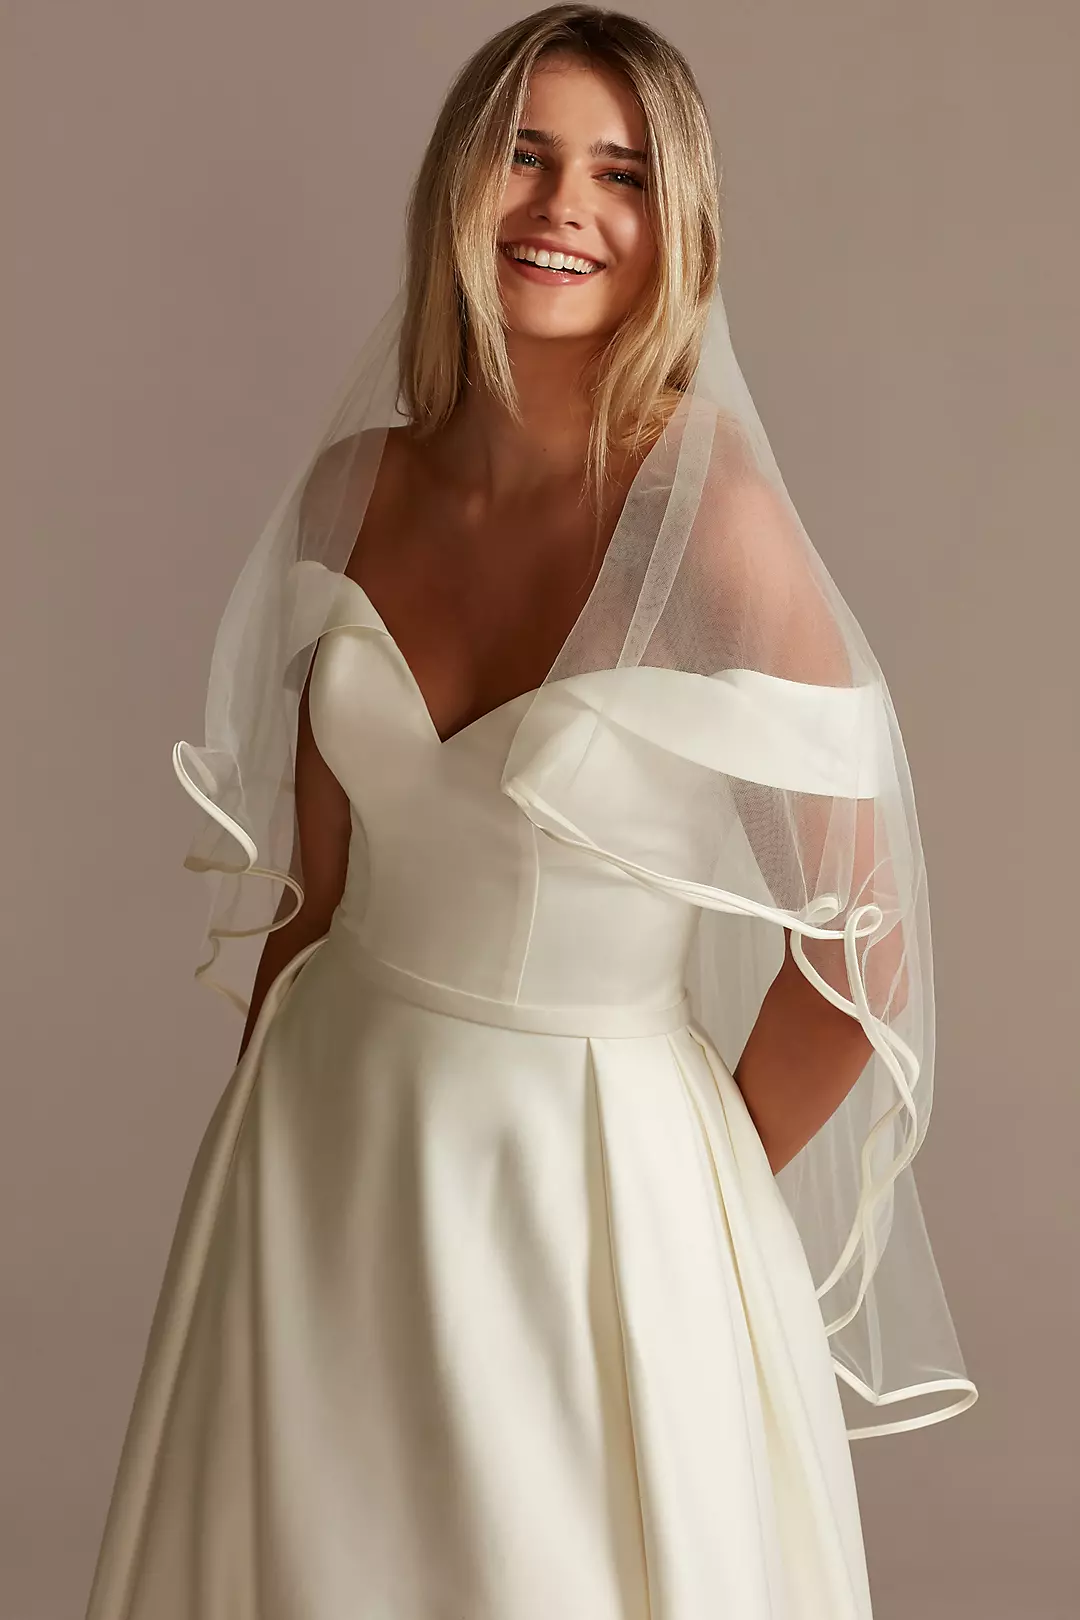 Adora by Simona Wedding Veils - Satin Edge Fingertip Length Bridal Veil